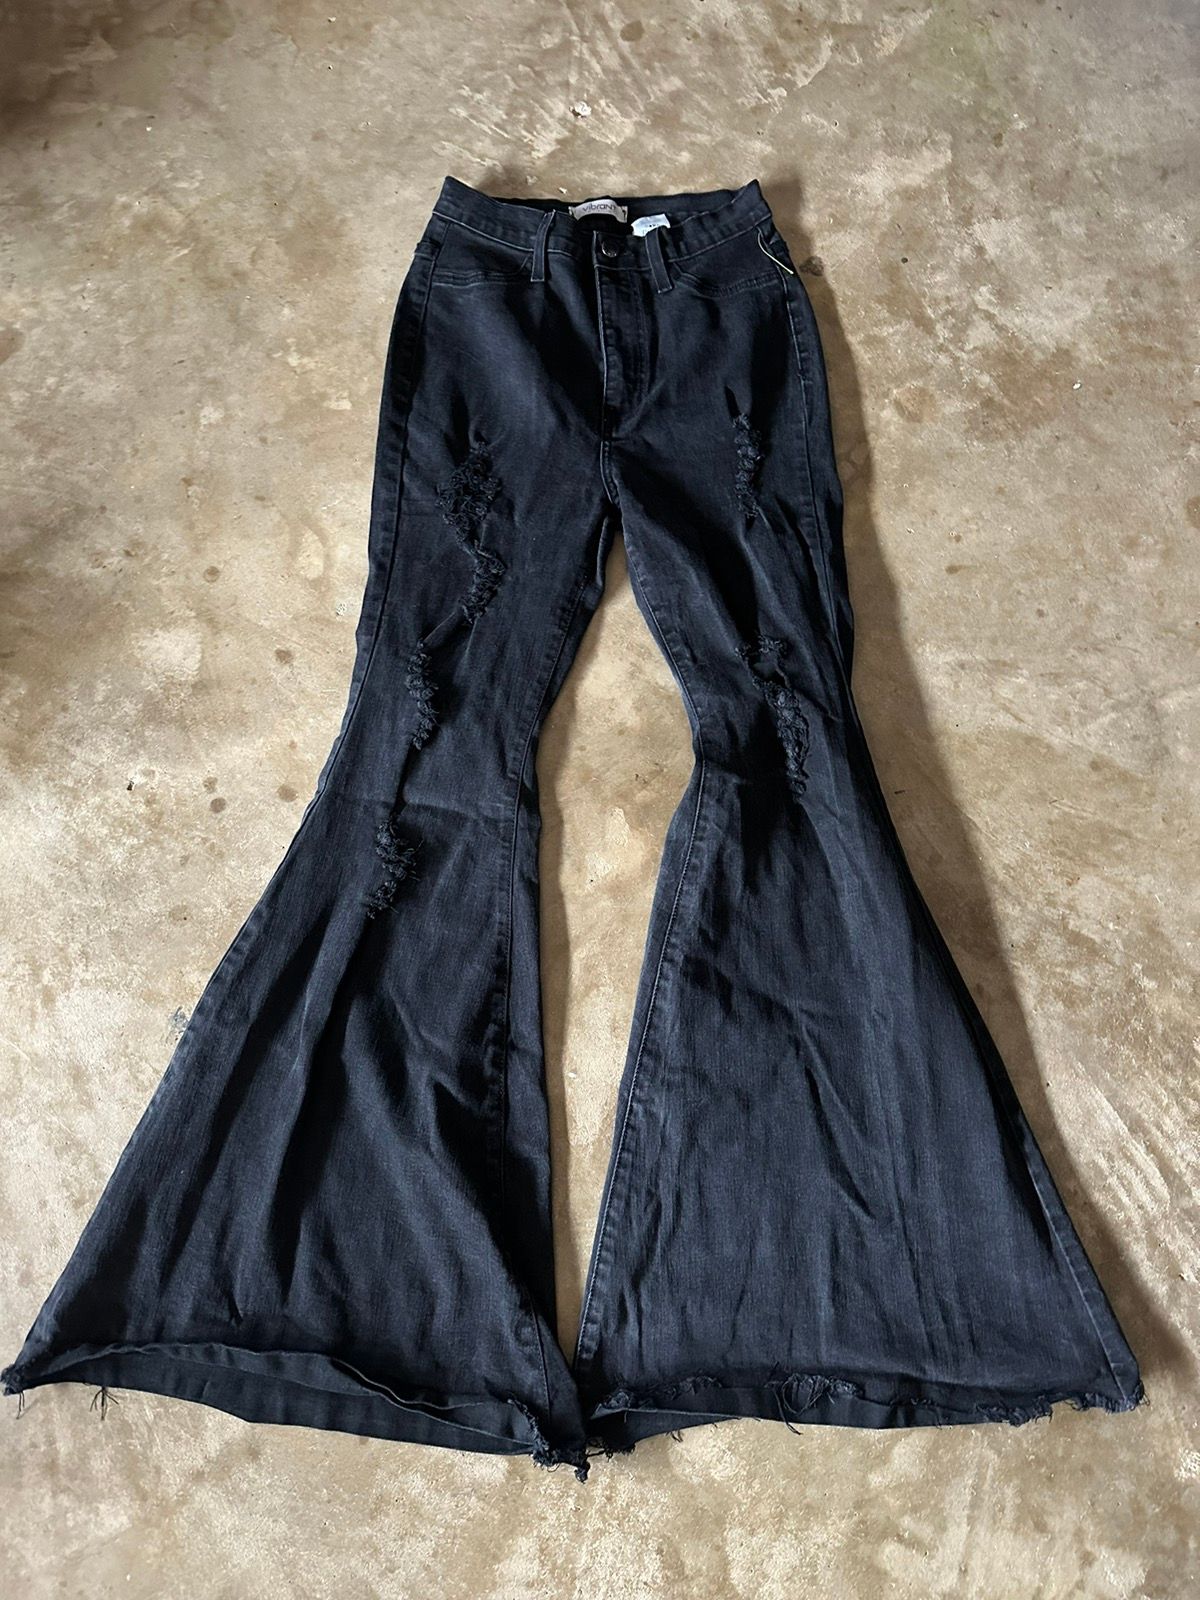 Pre-owned If Six Was Nine Vintage Distressed Bellbottom Black Pants Size 29